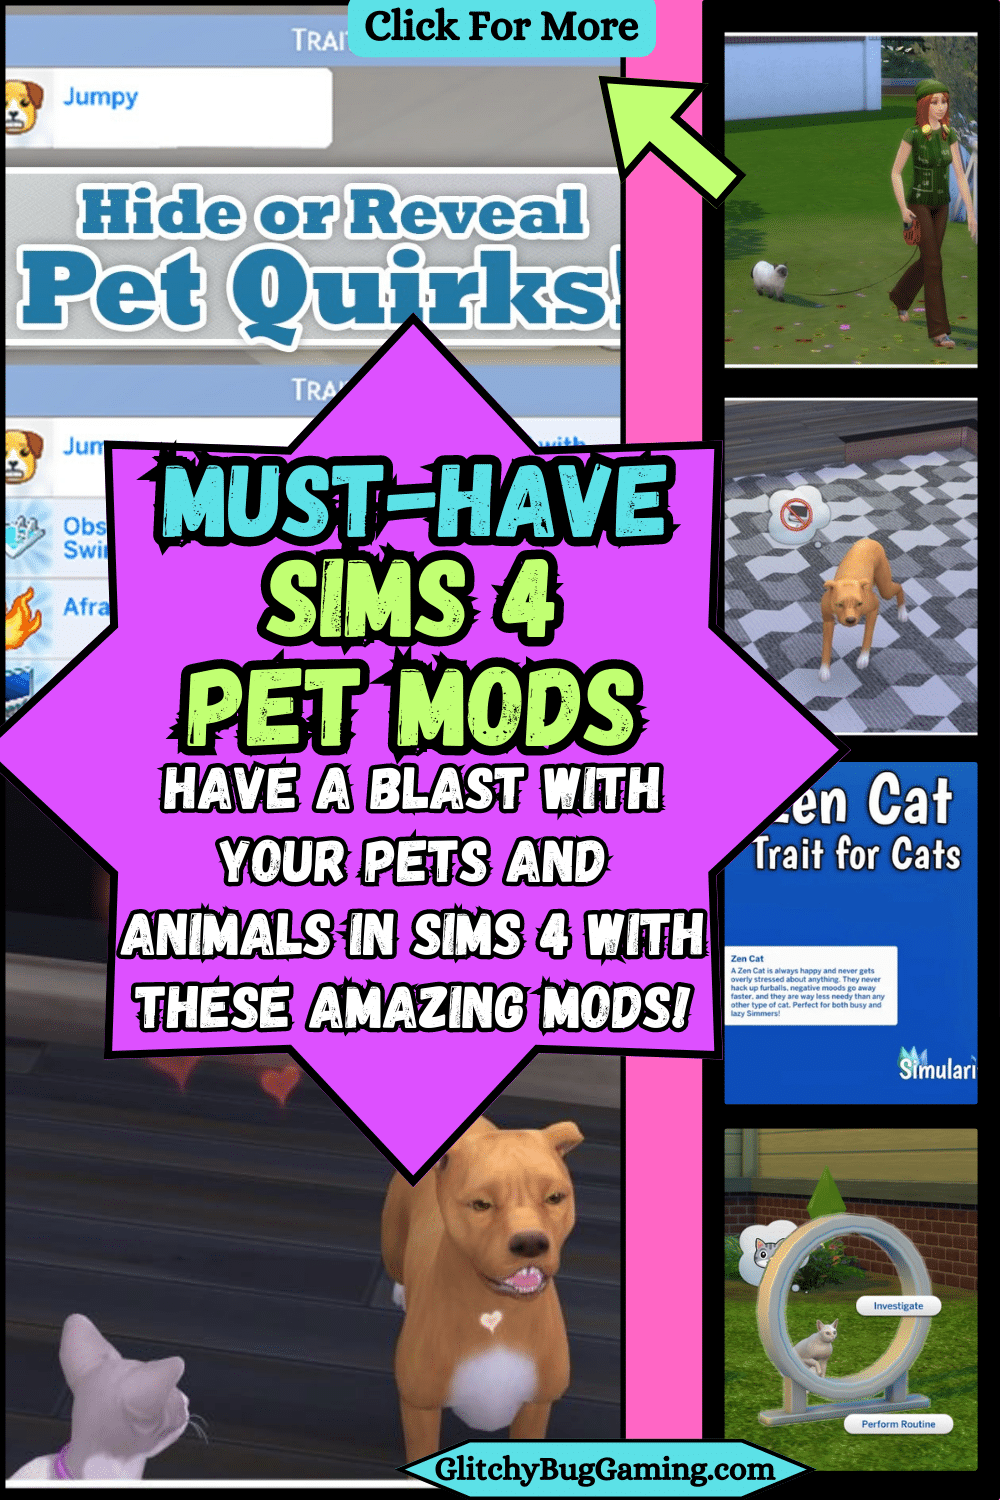 sims 4 pet mods like pet quirks, walk the cat, zen cat trait, and more pet interactions